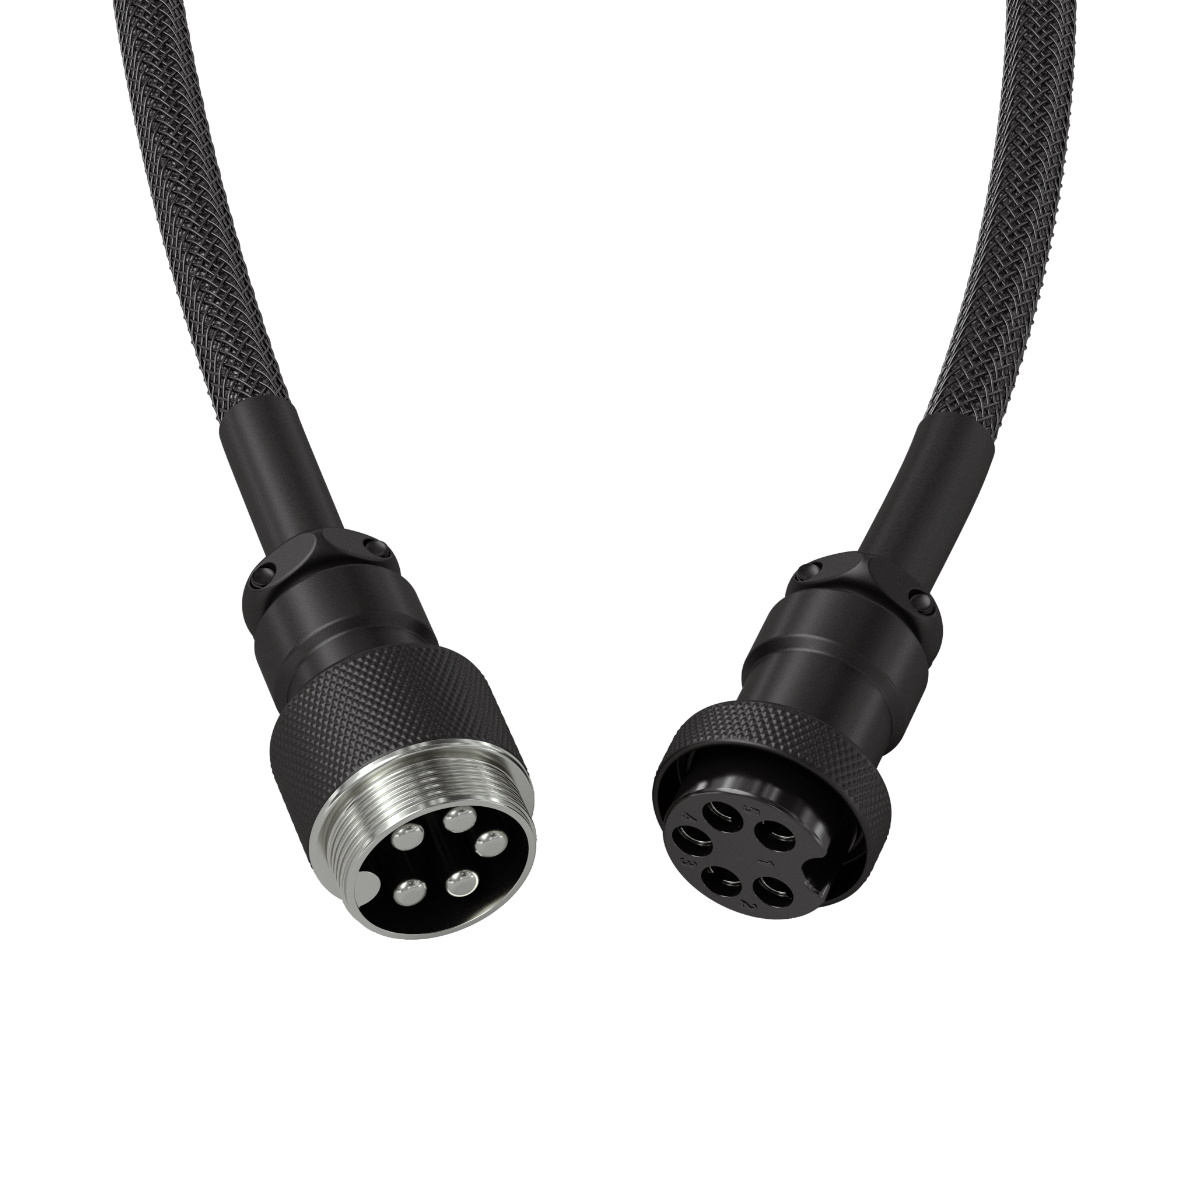 Glorious - Glorious Coiled Cable USB-C to USB-A - Phantom Black (GLO-CBL-COIL-BLACK)